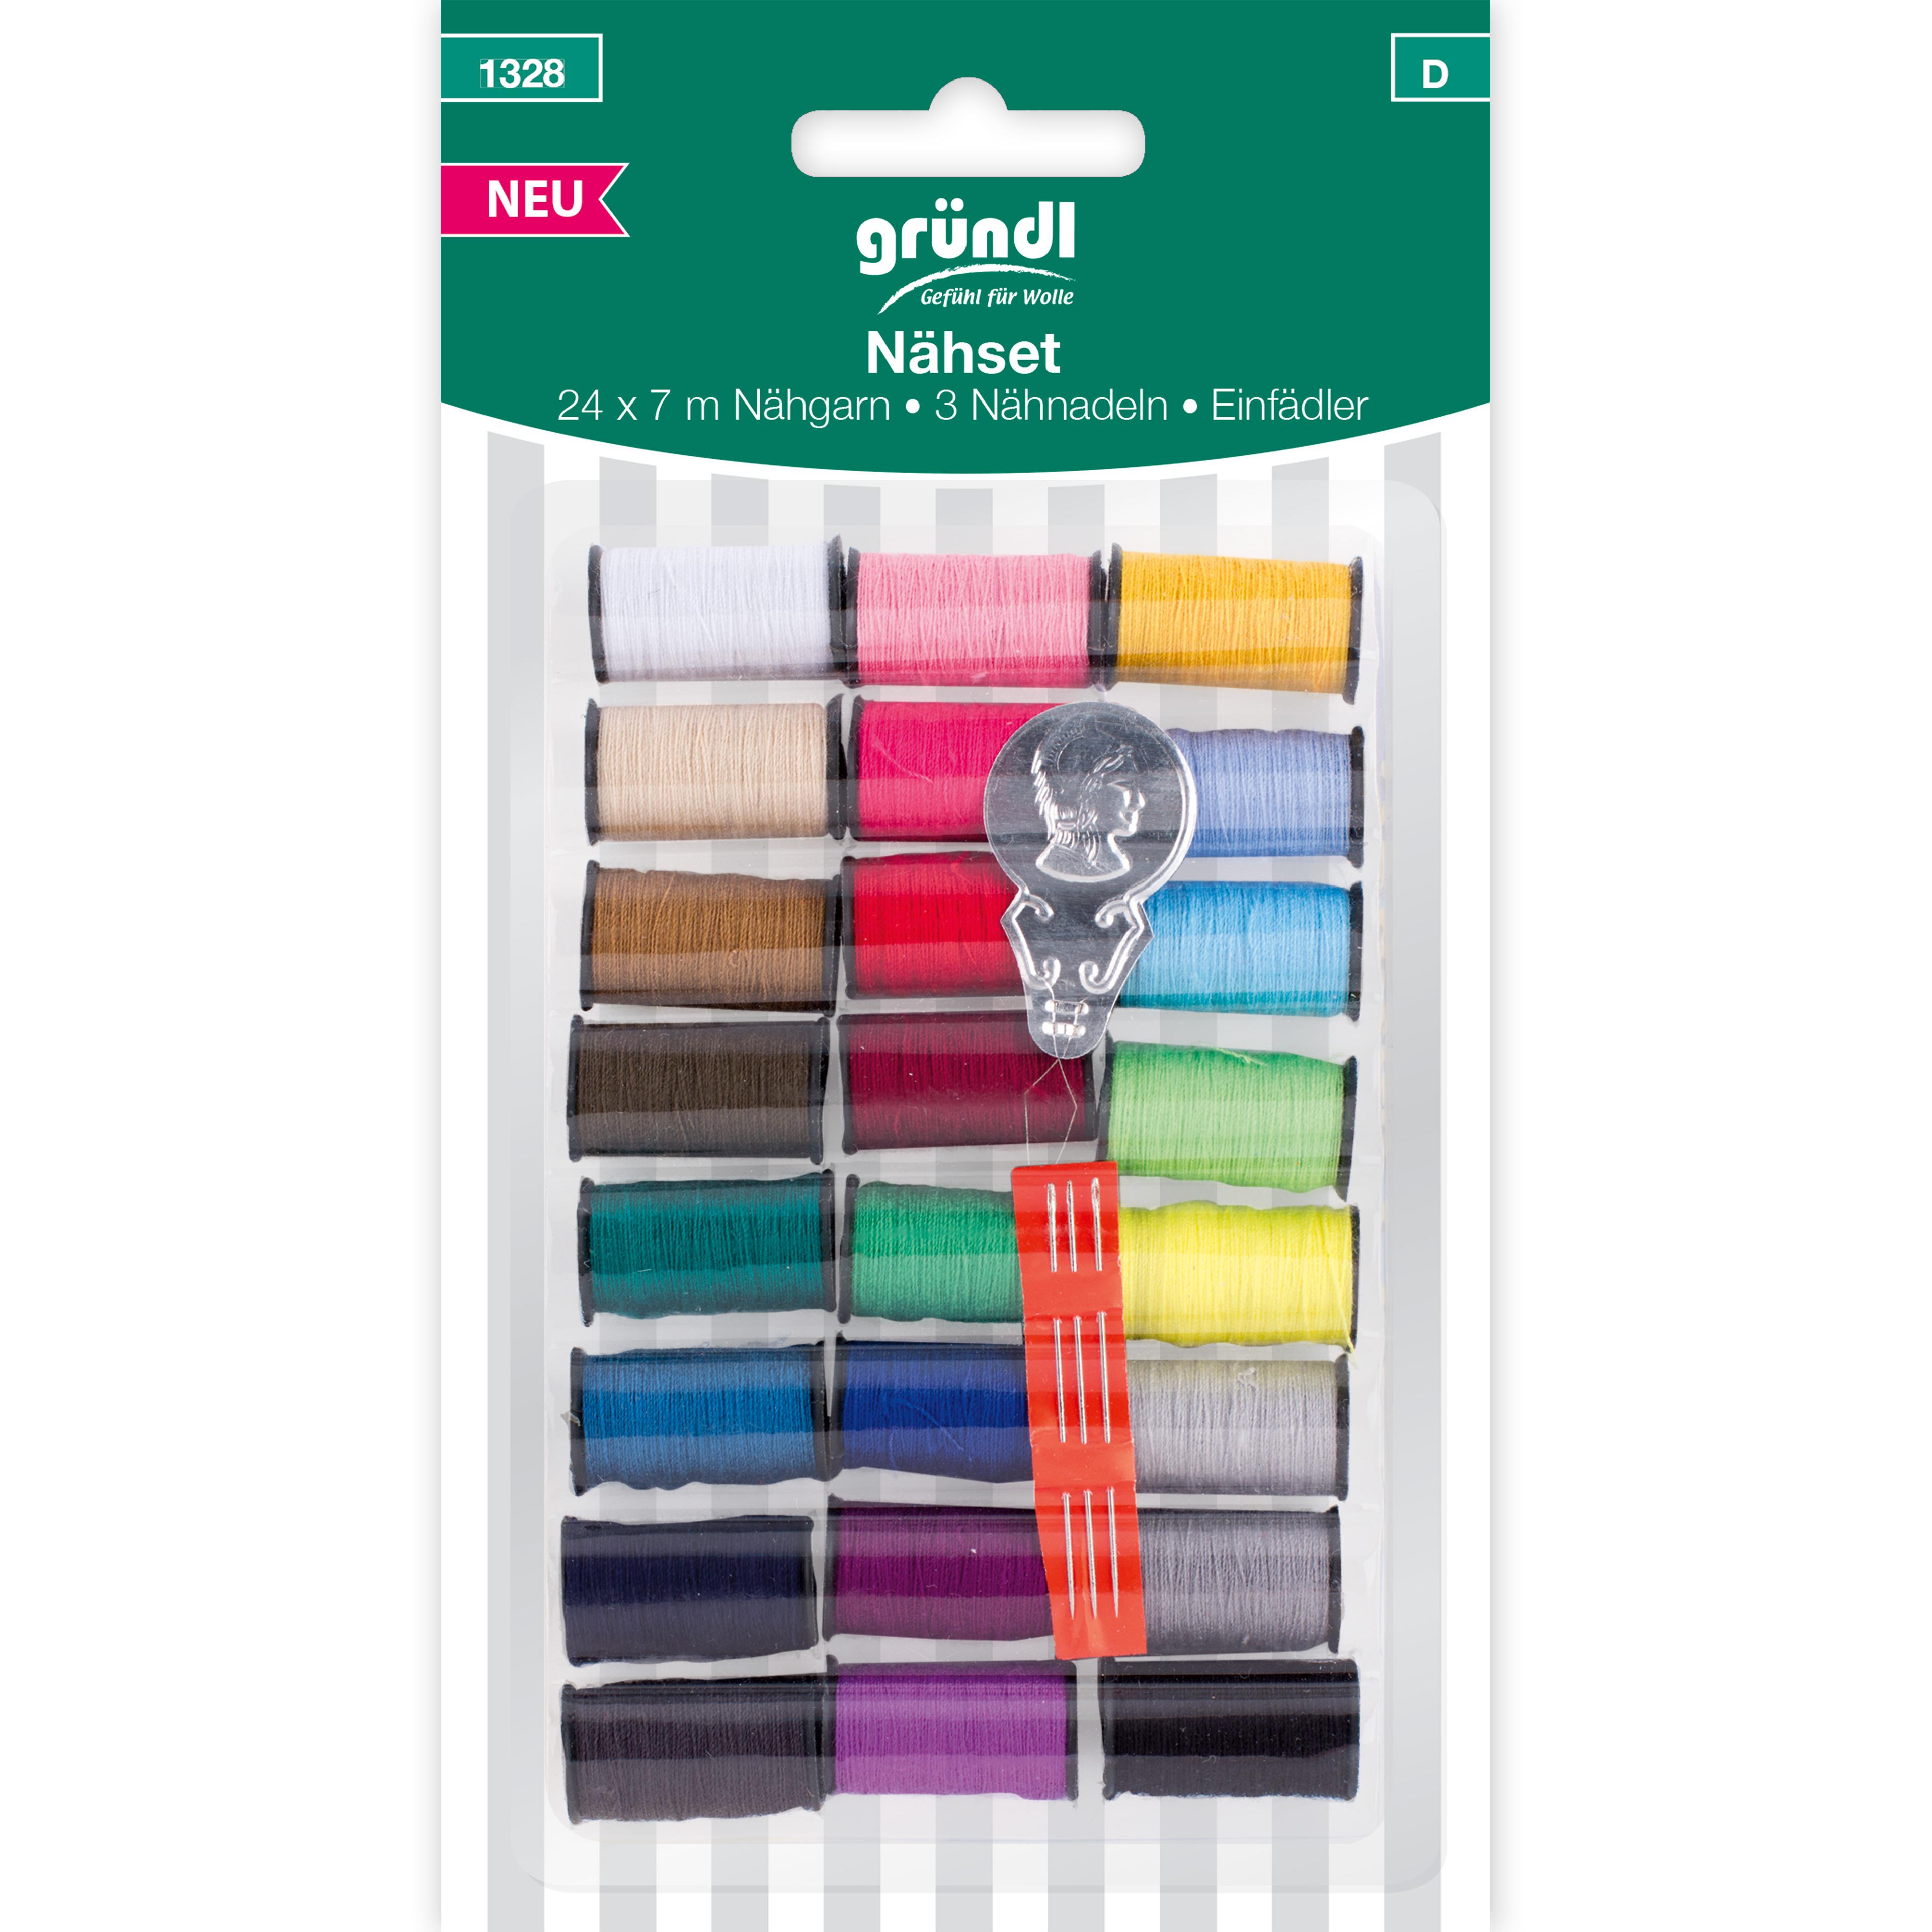 Sewing kit (24 x 7 m threads, 3 needles, threader)